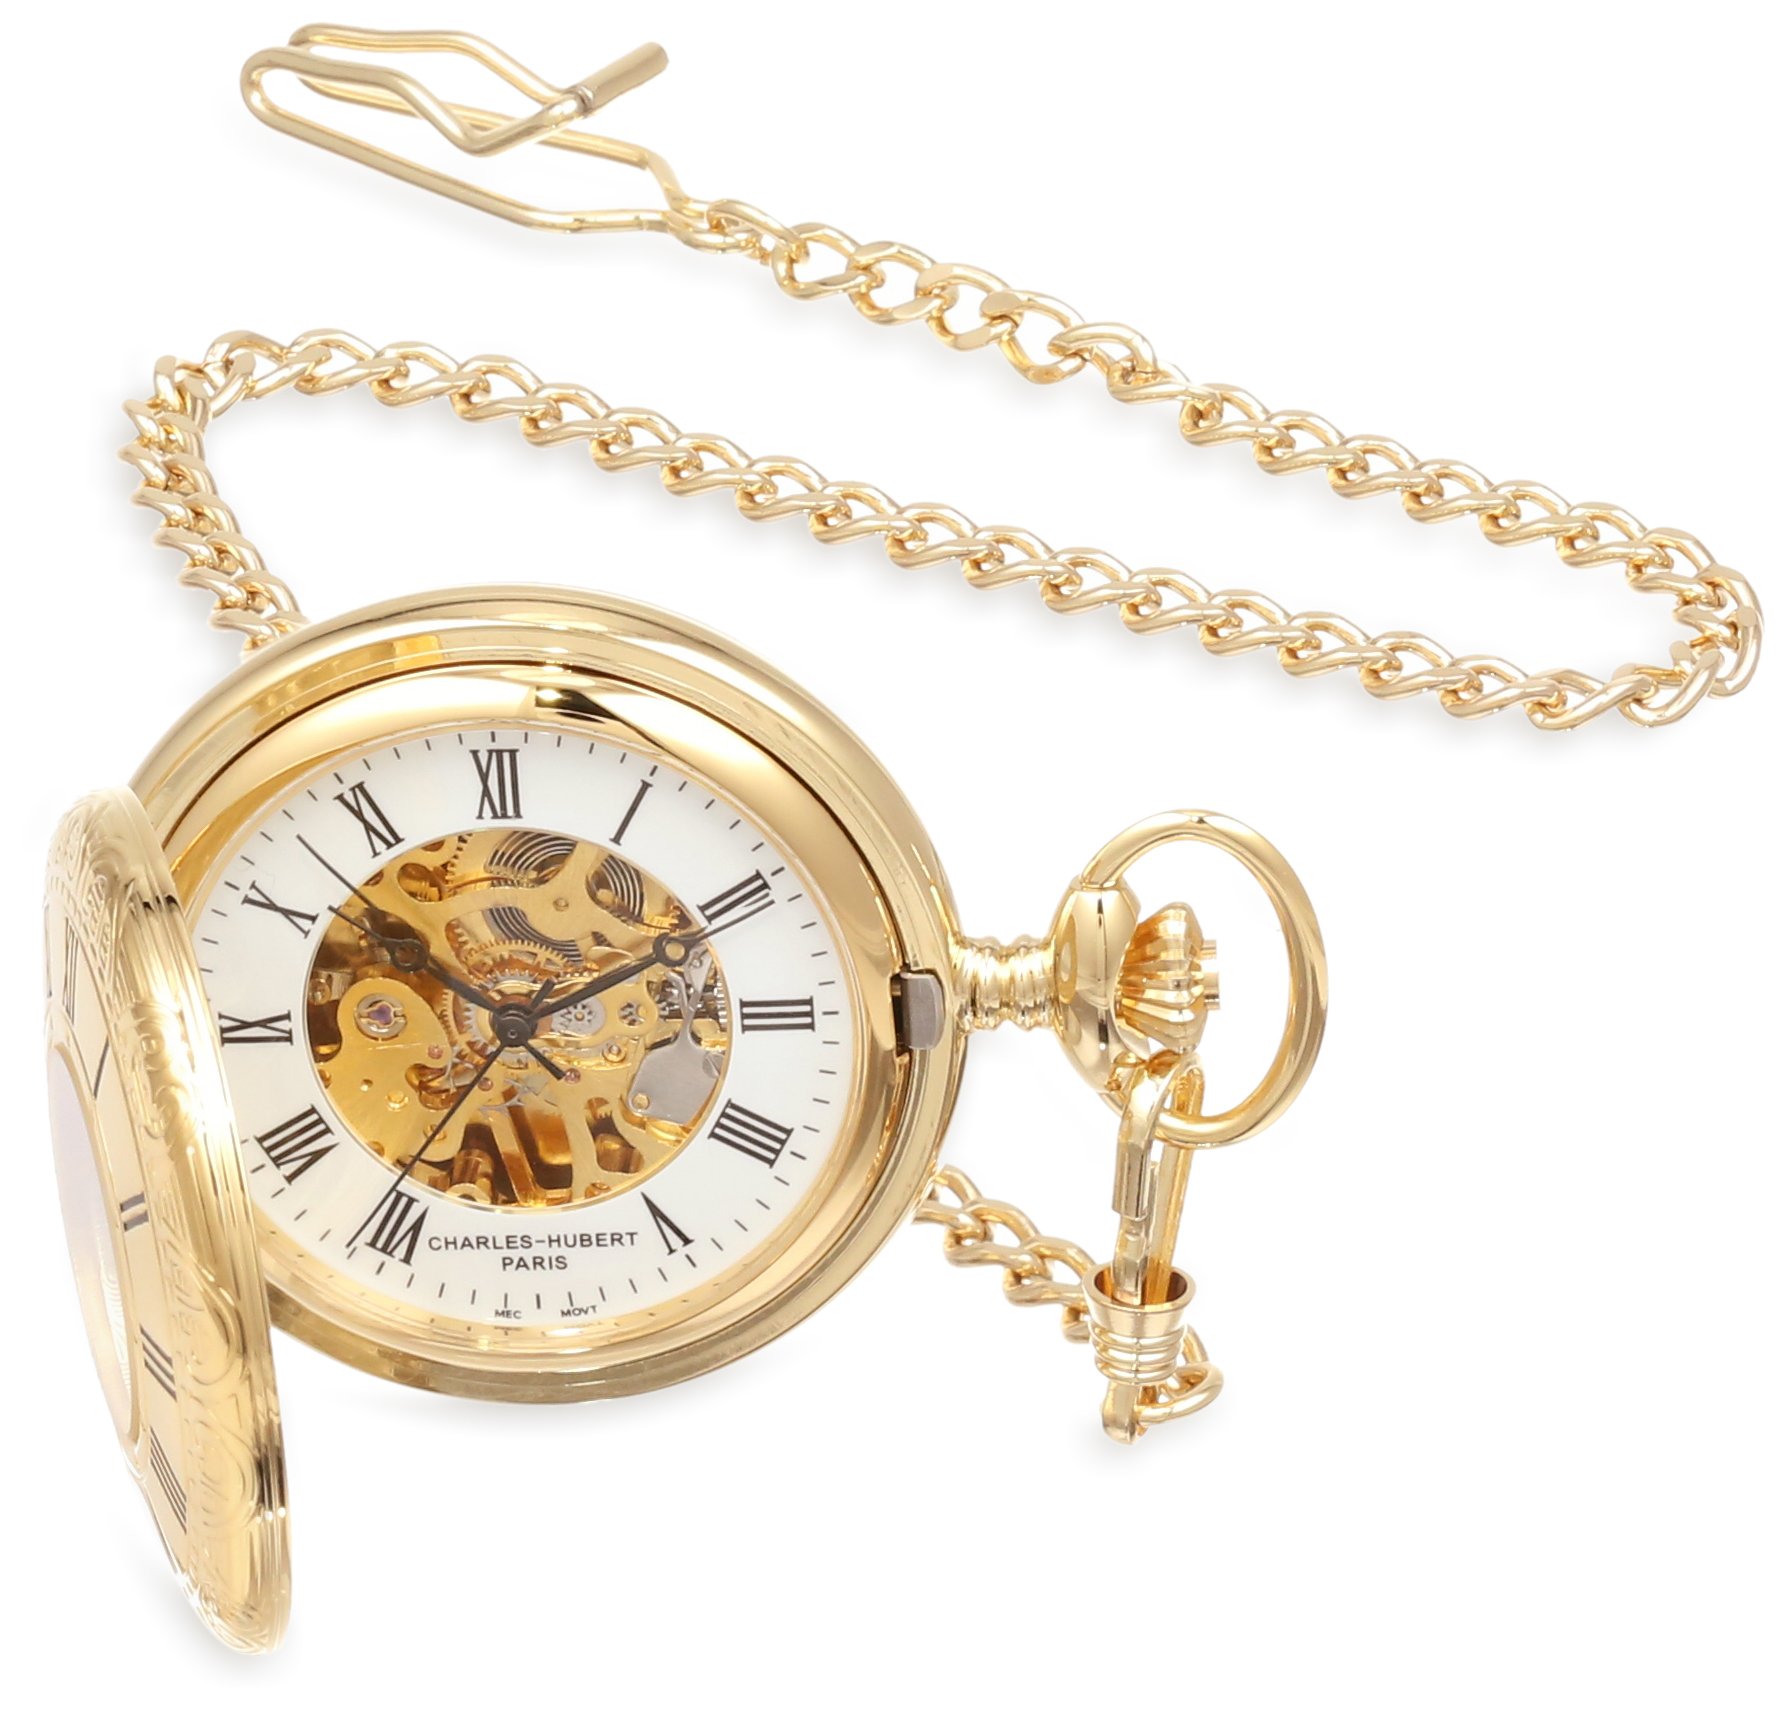 Charles-Hubert, Paris Gold-Plated Mechanical Pocket Watch